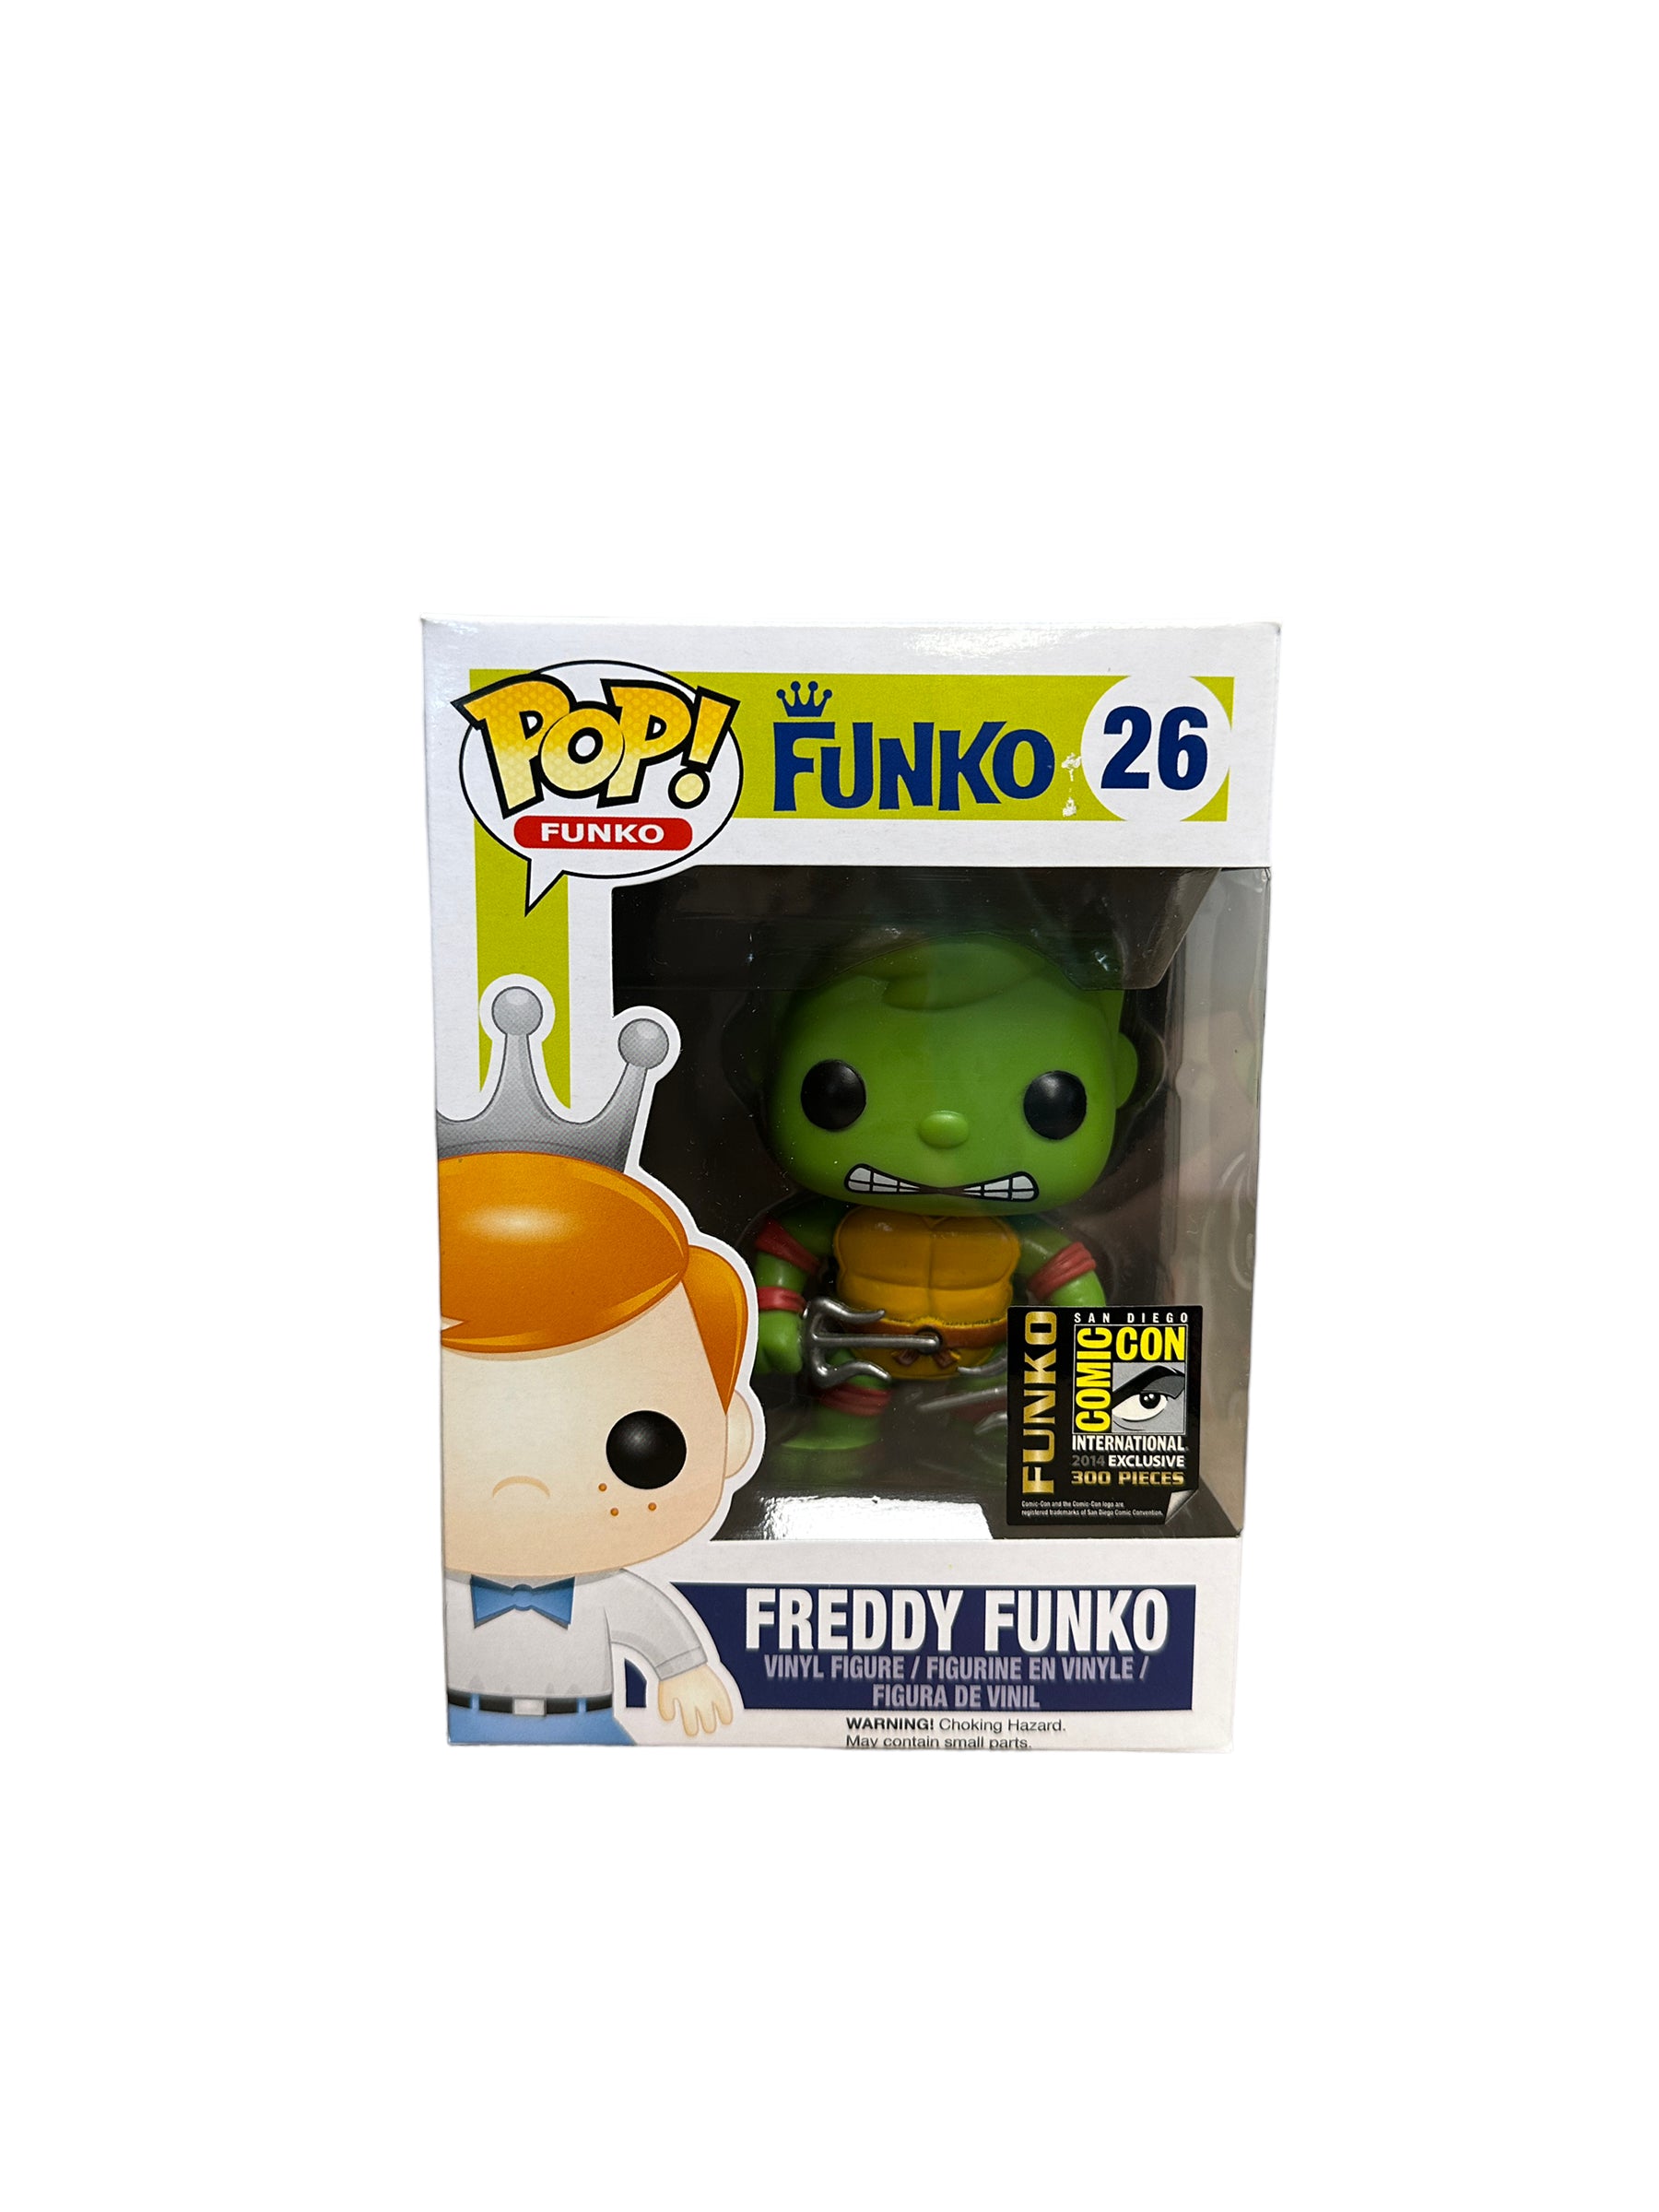 Freddy Funko as Raphael #26 Funko Pop! - SDCC 2014 Exclusive LE300 Pcs - Condition 8.5/10